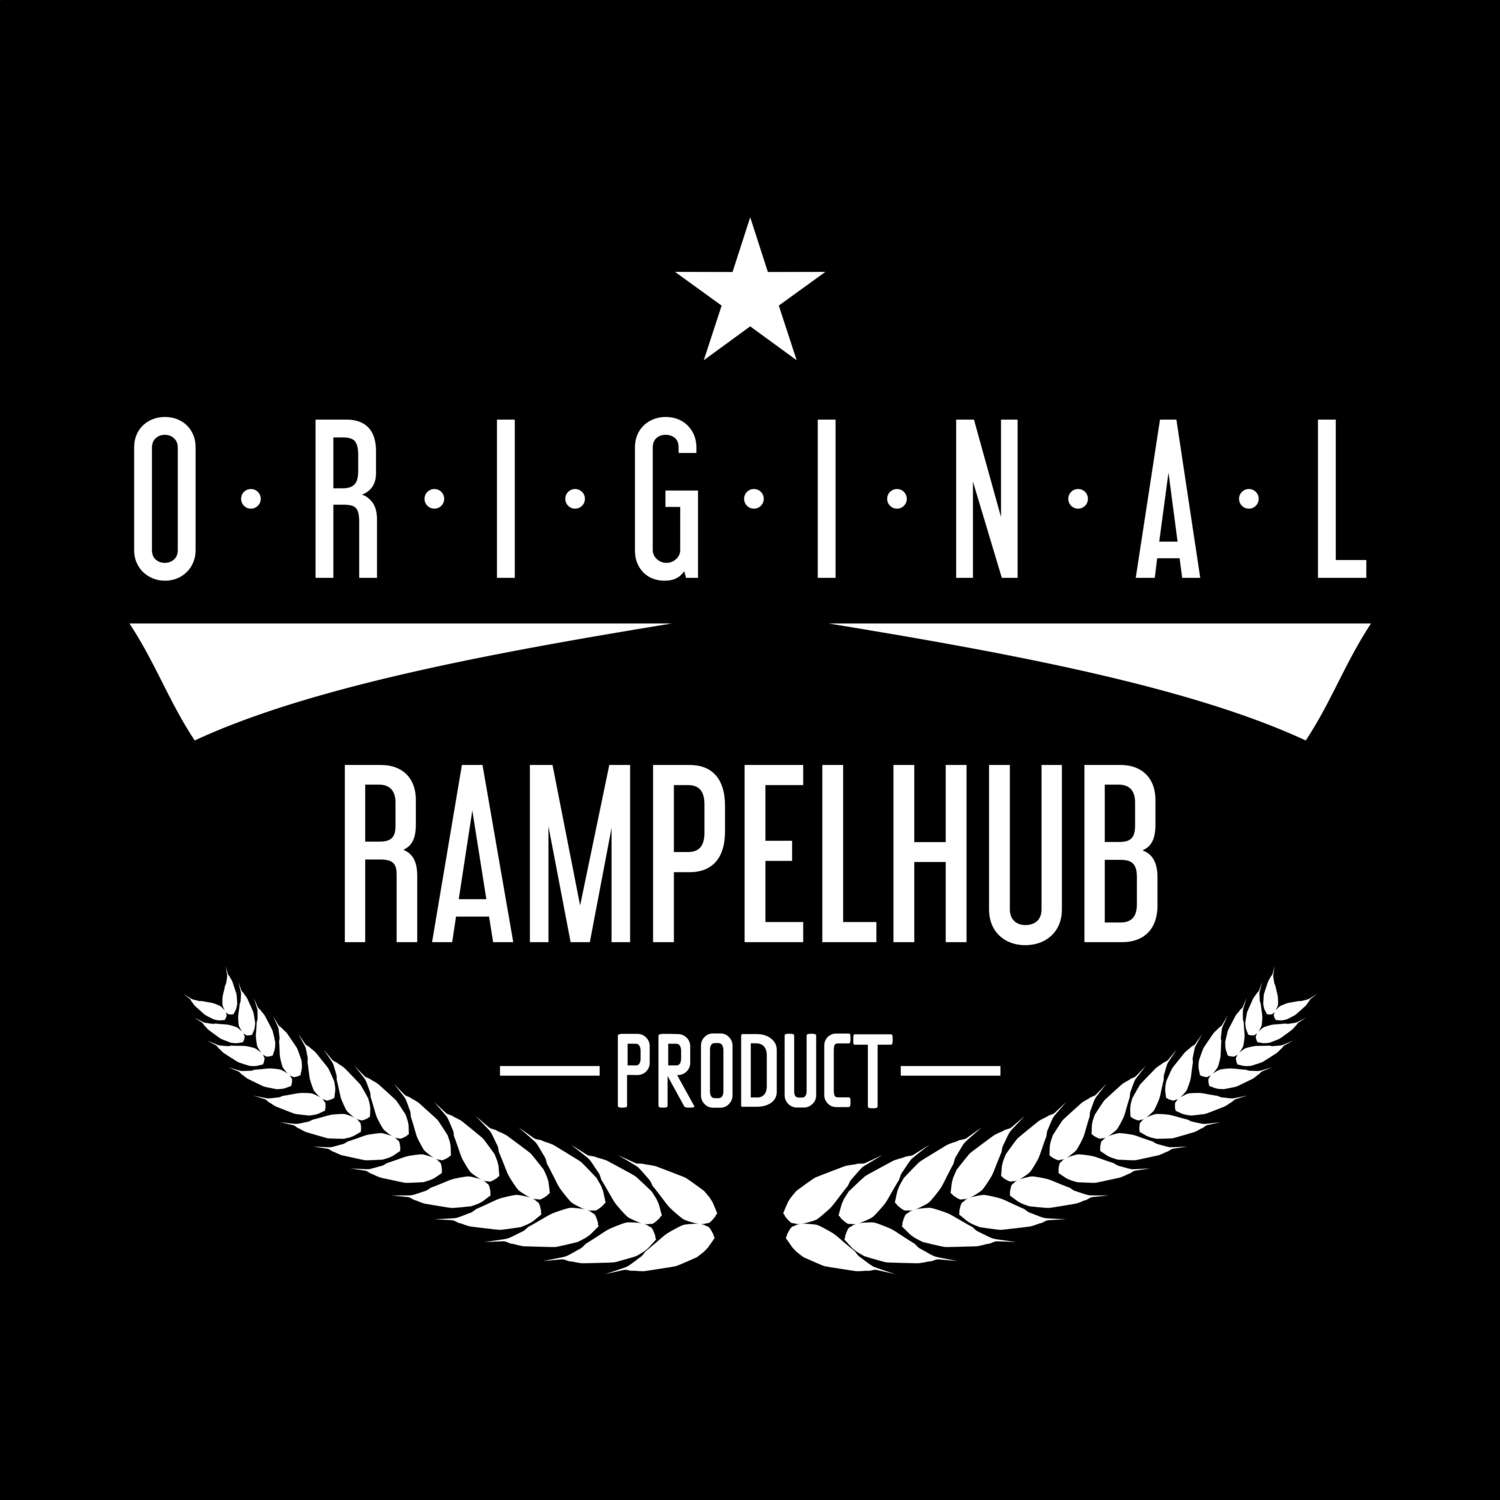 Rampelhub T-Shirt »Original Product«